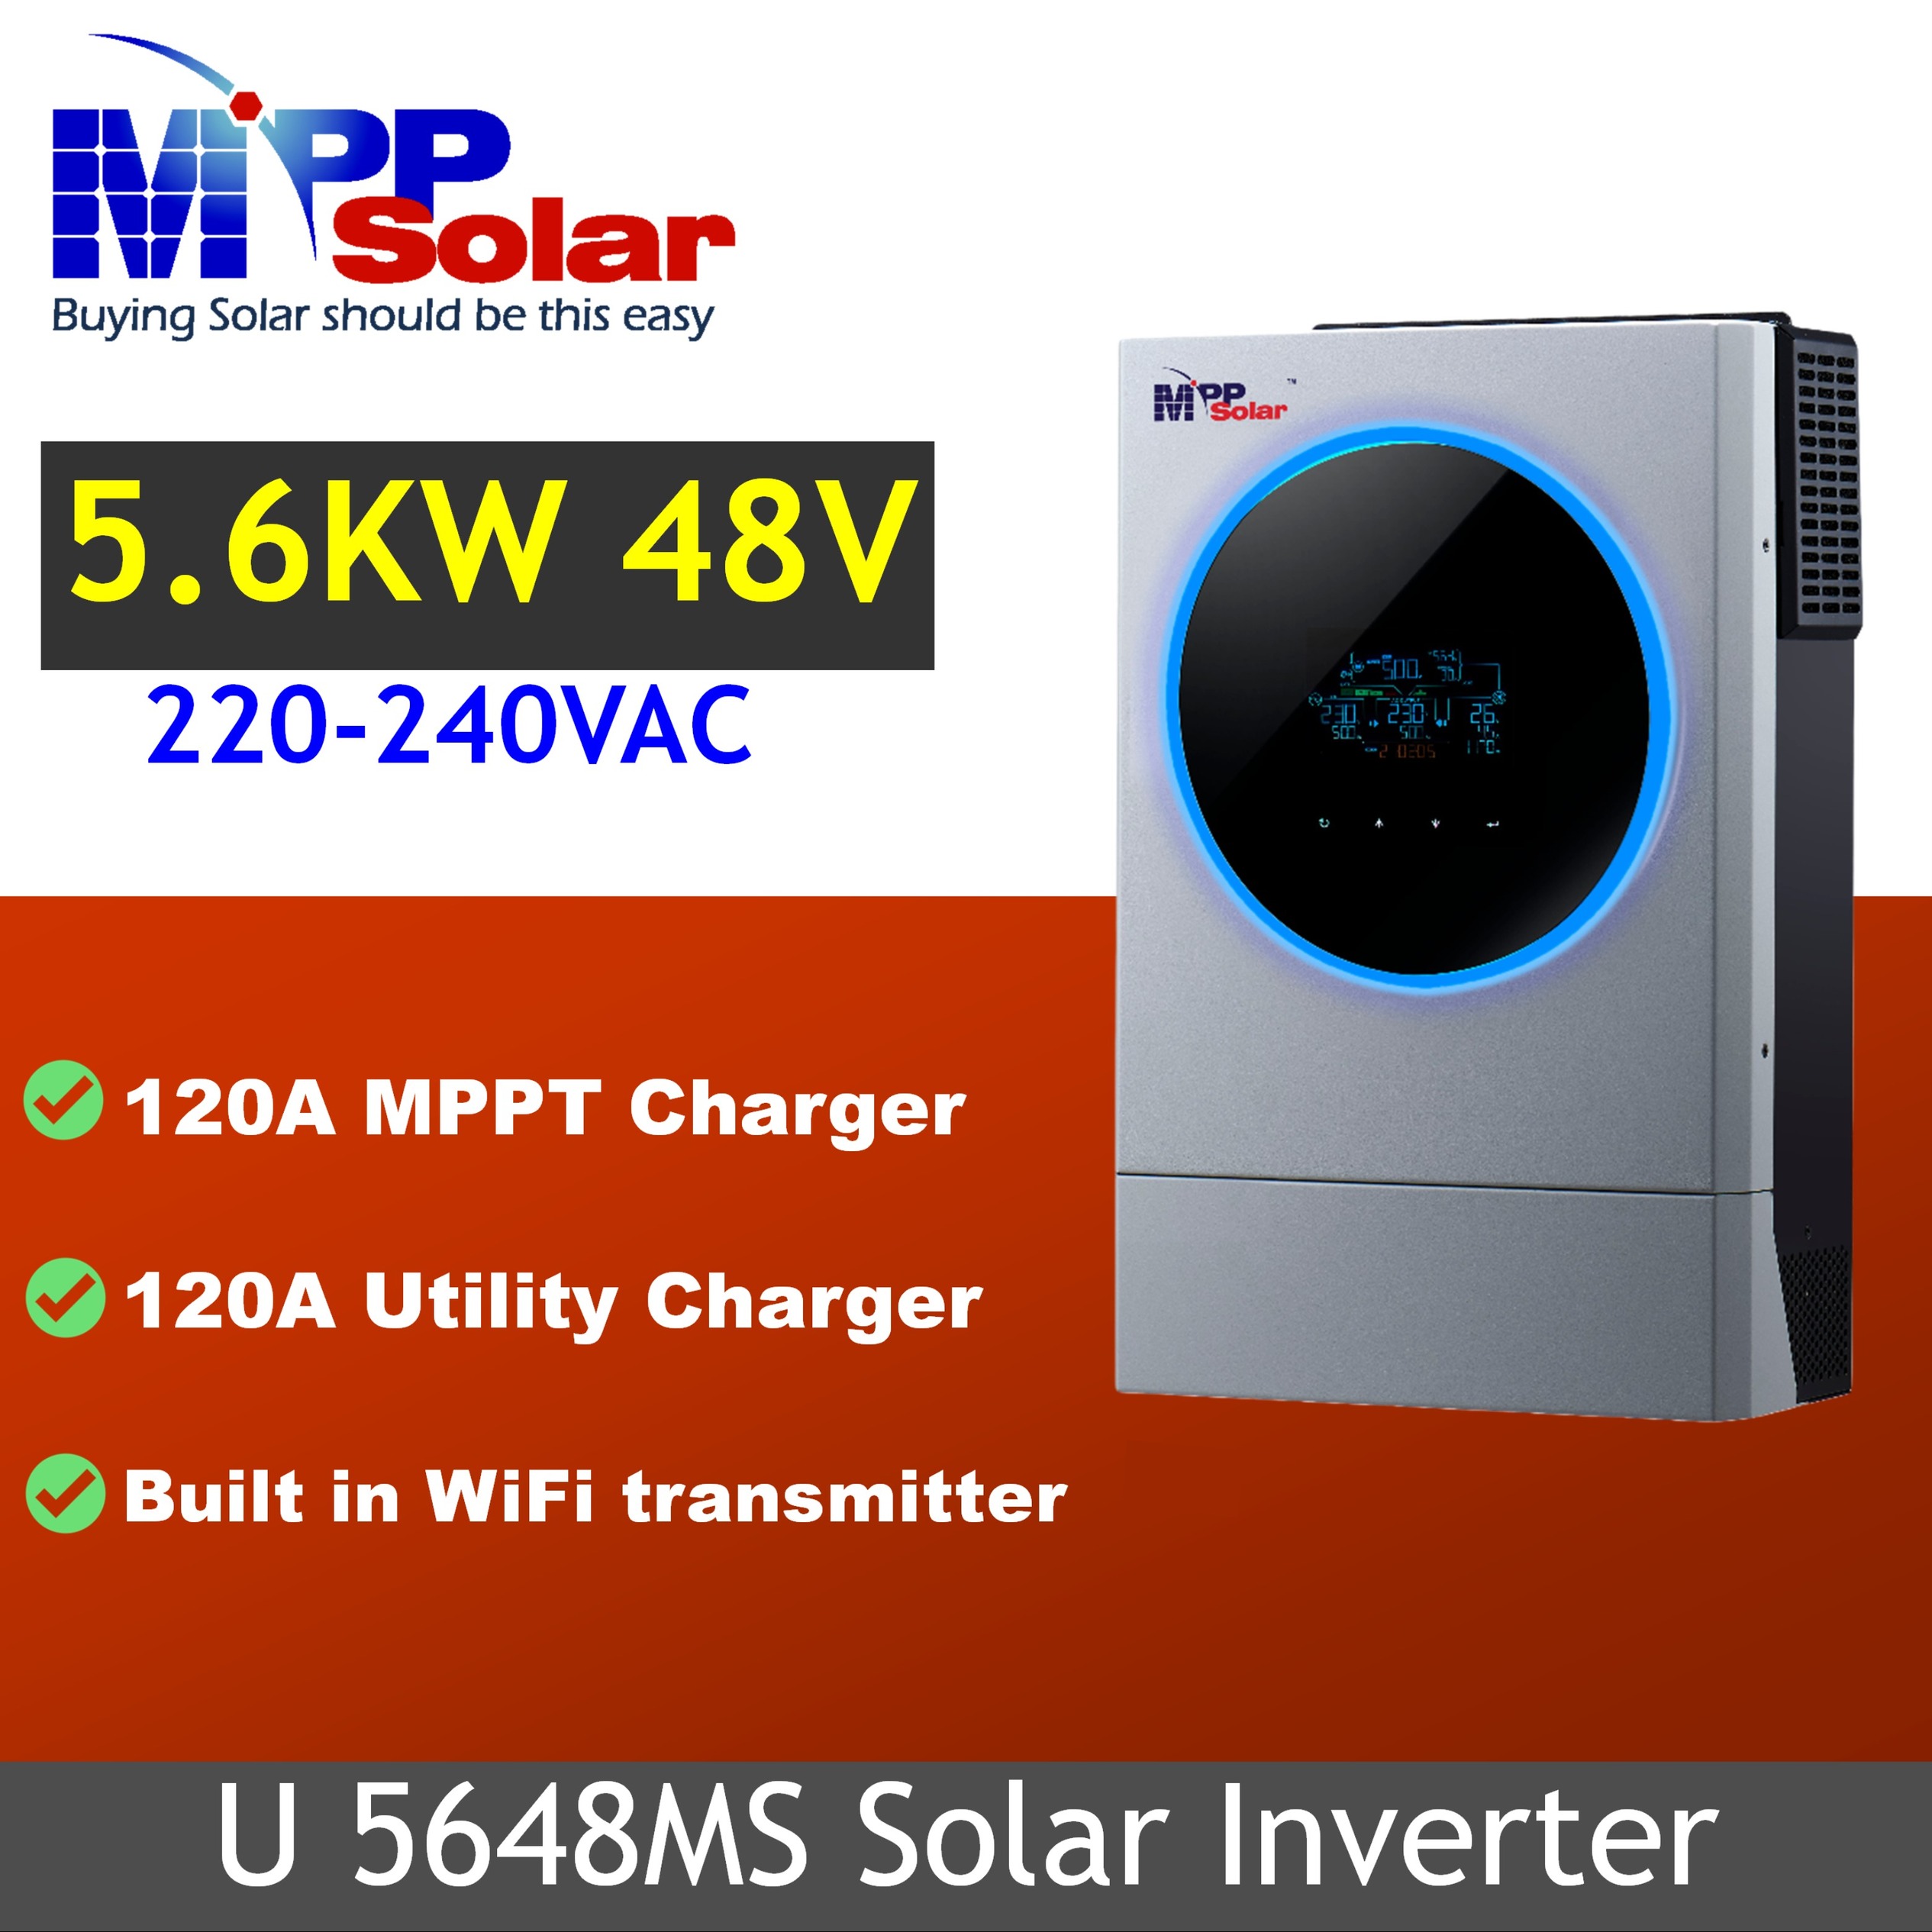 LV6548V (6.5KW 48V) – Maximum Solar Online